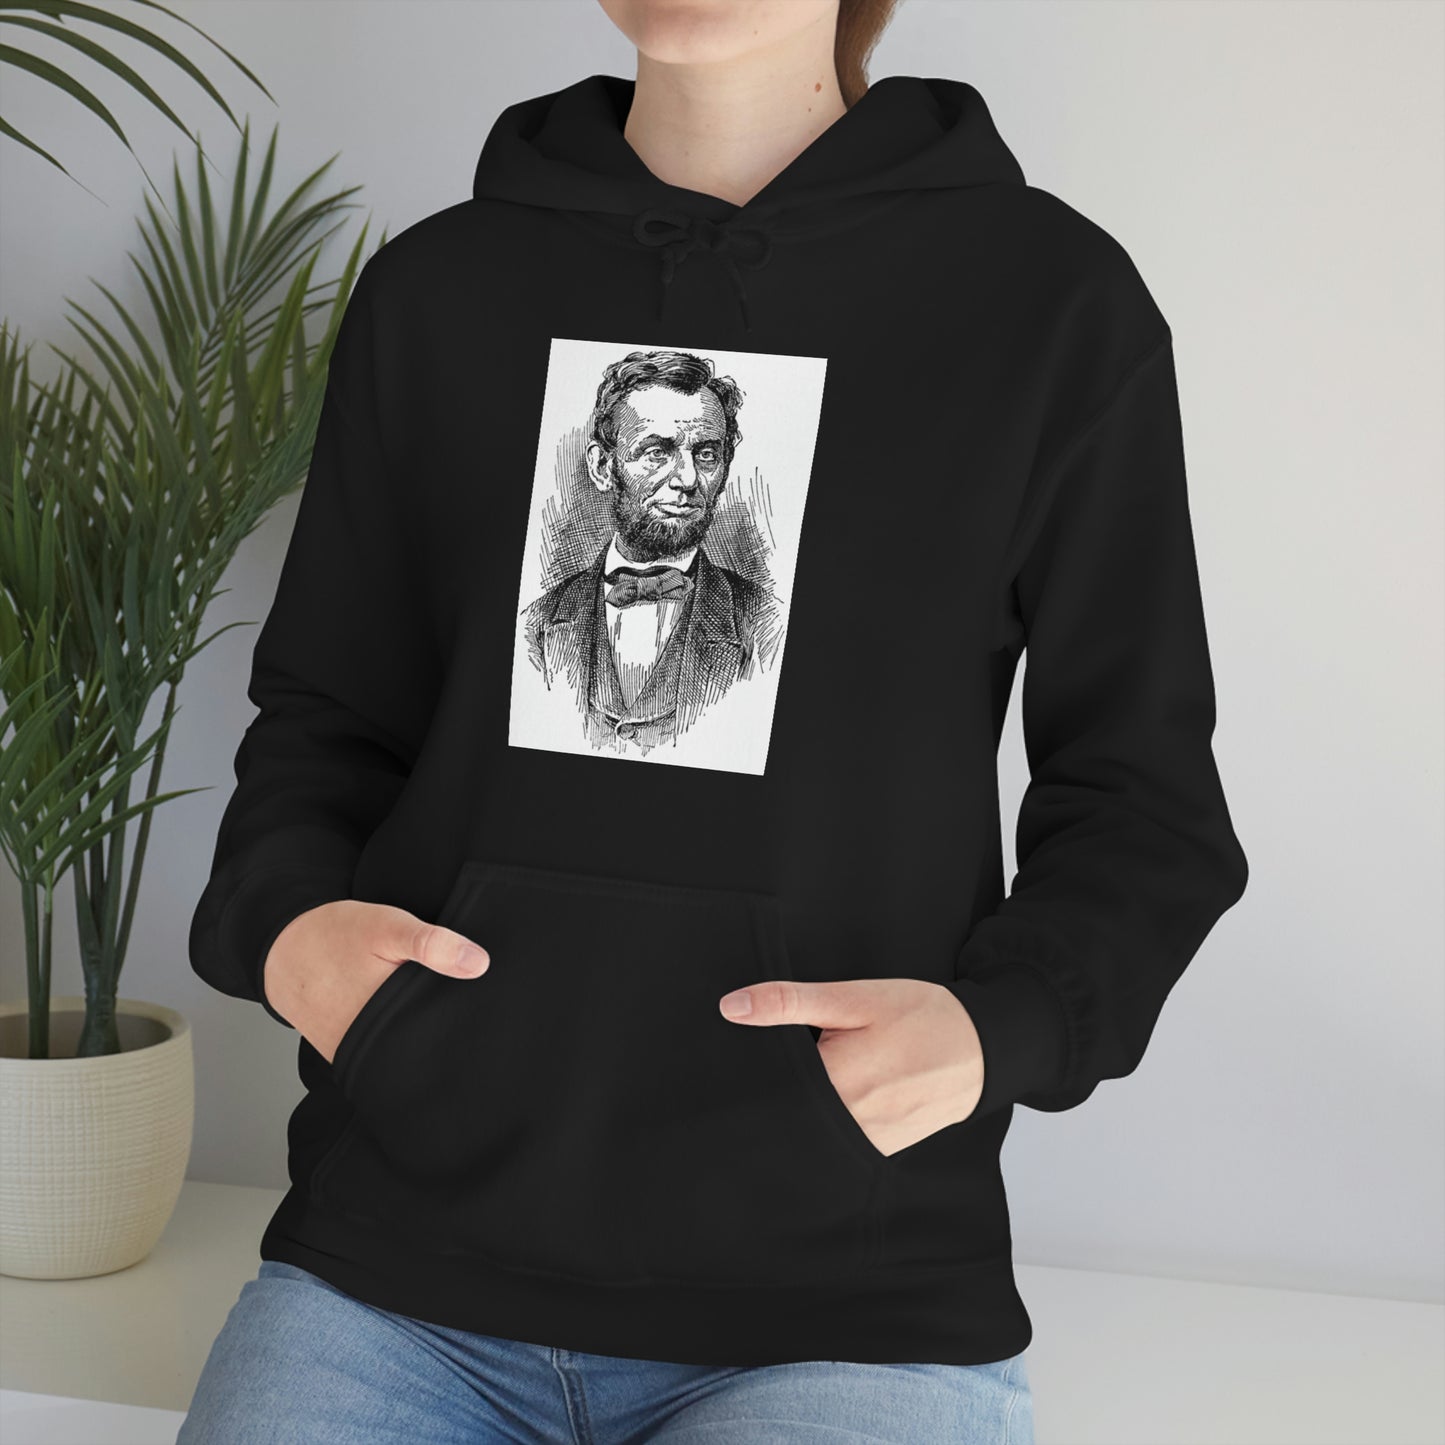 Abe Lincoln Unisex Heavy Blend Hooded Sweatshirt